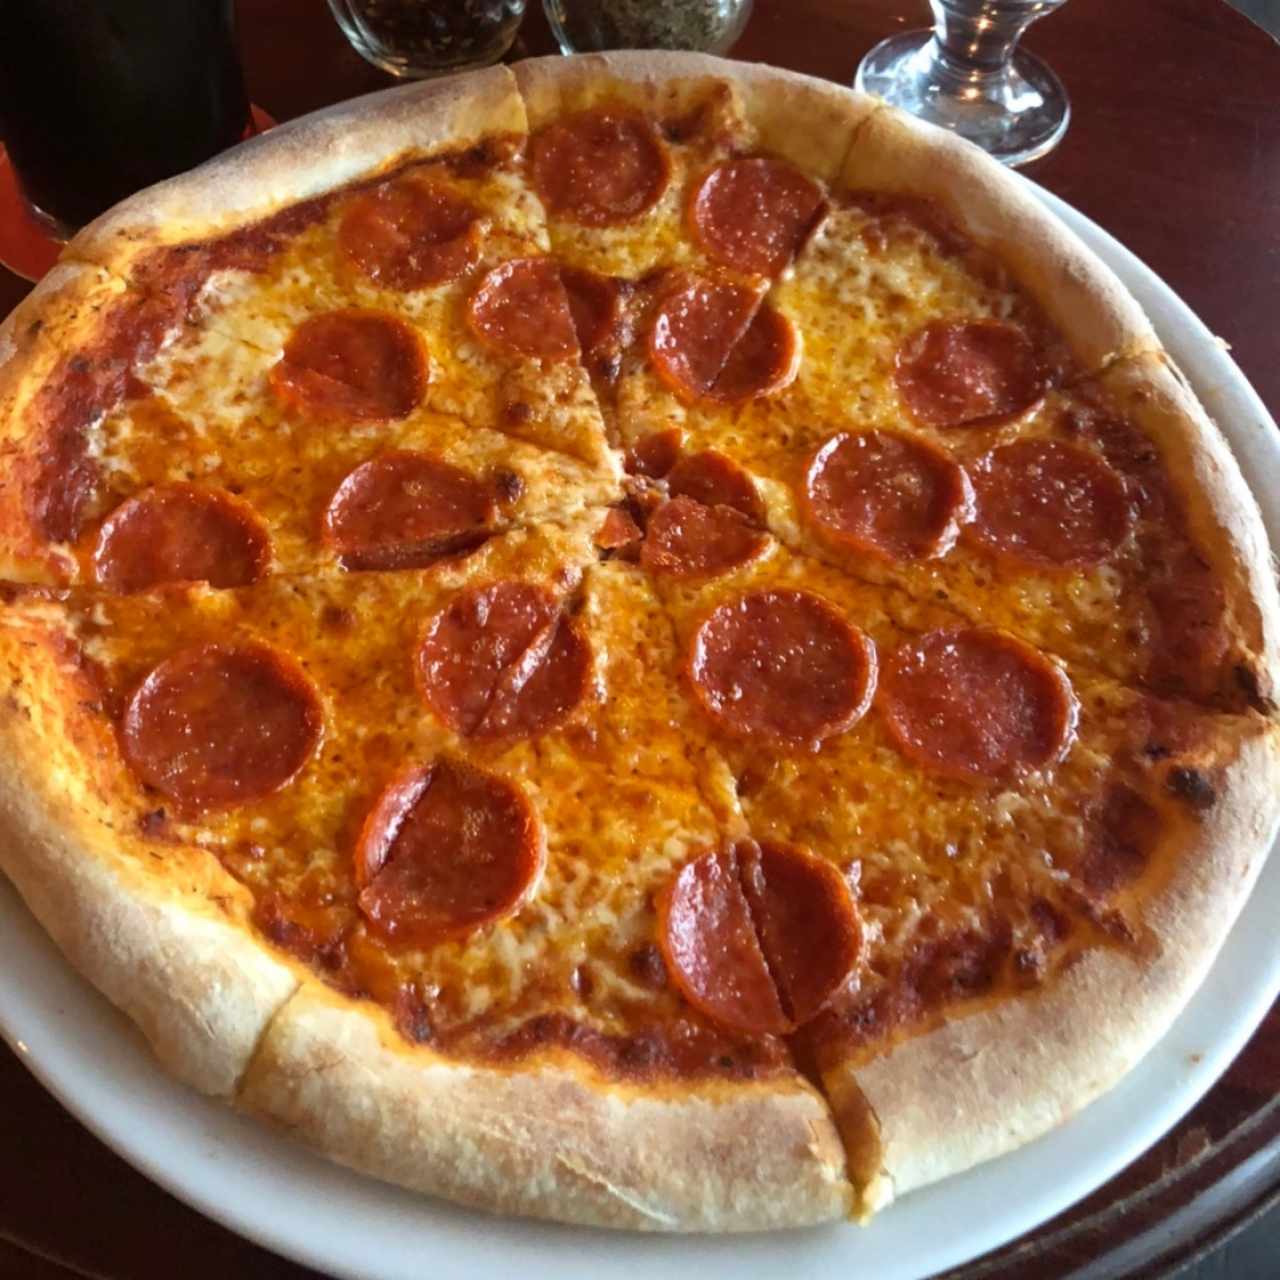 Pizza Peperoni 